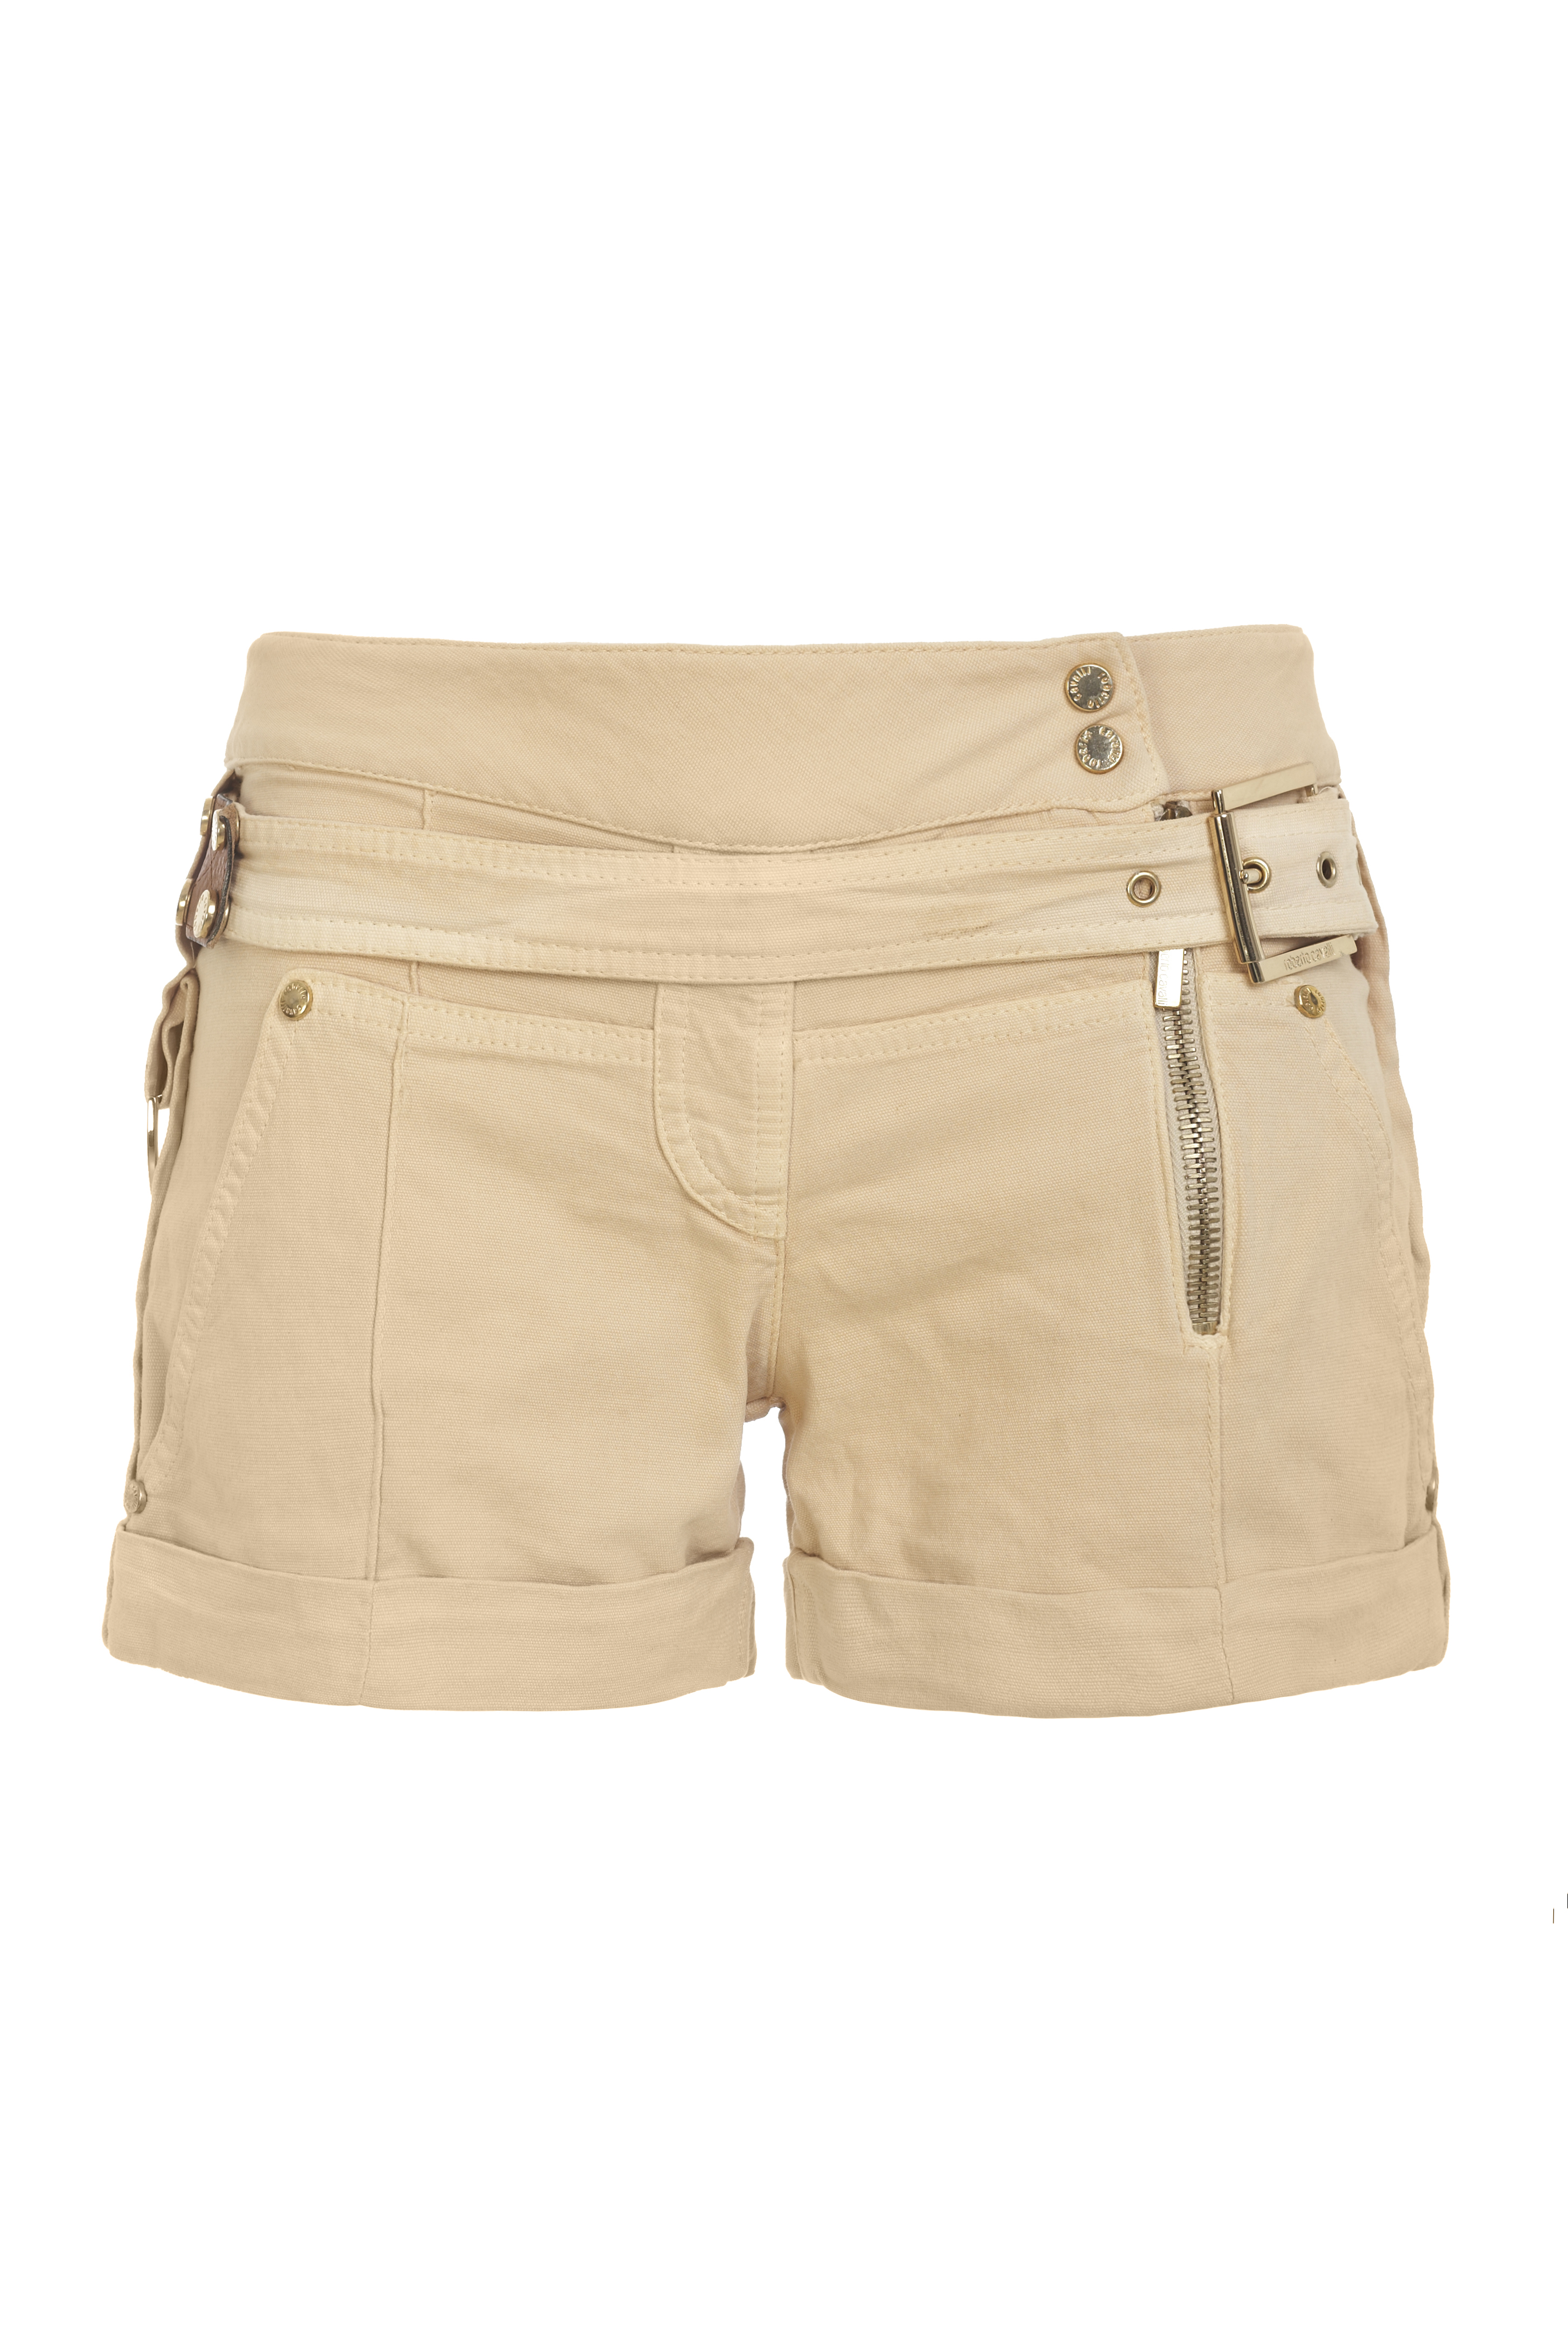 Roberto Cavalli beige shorts | Curate8